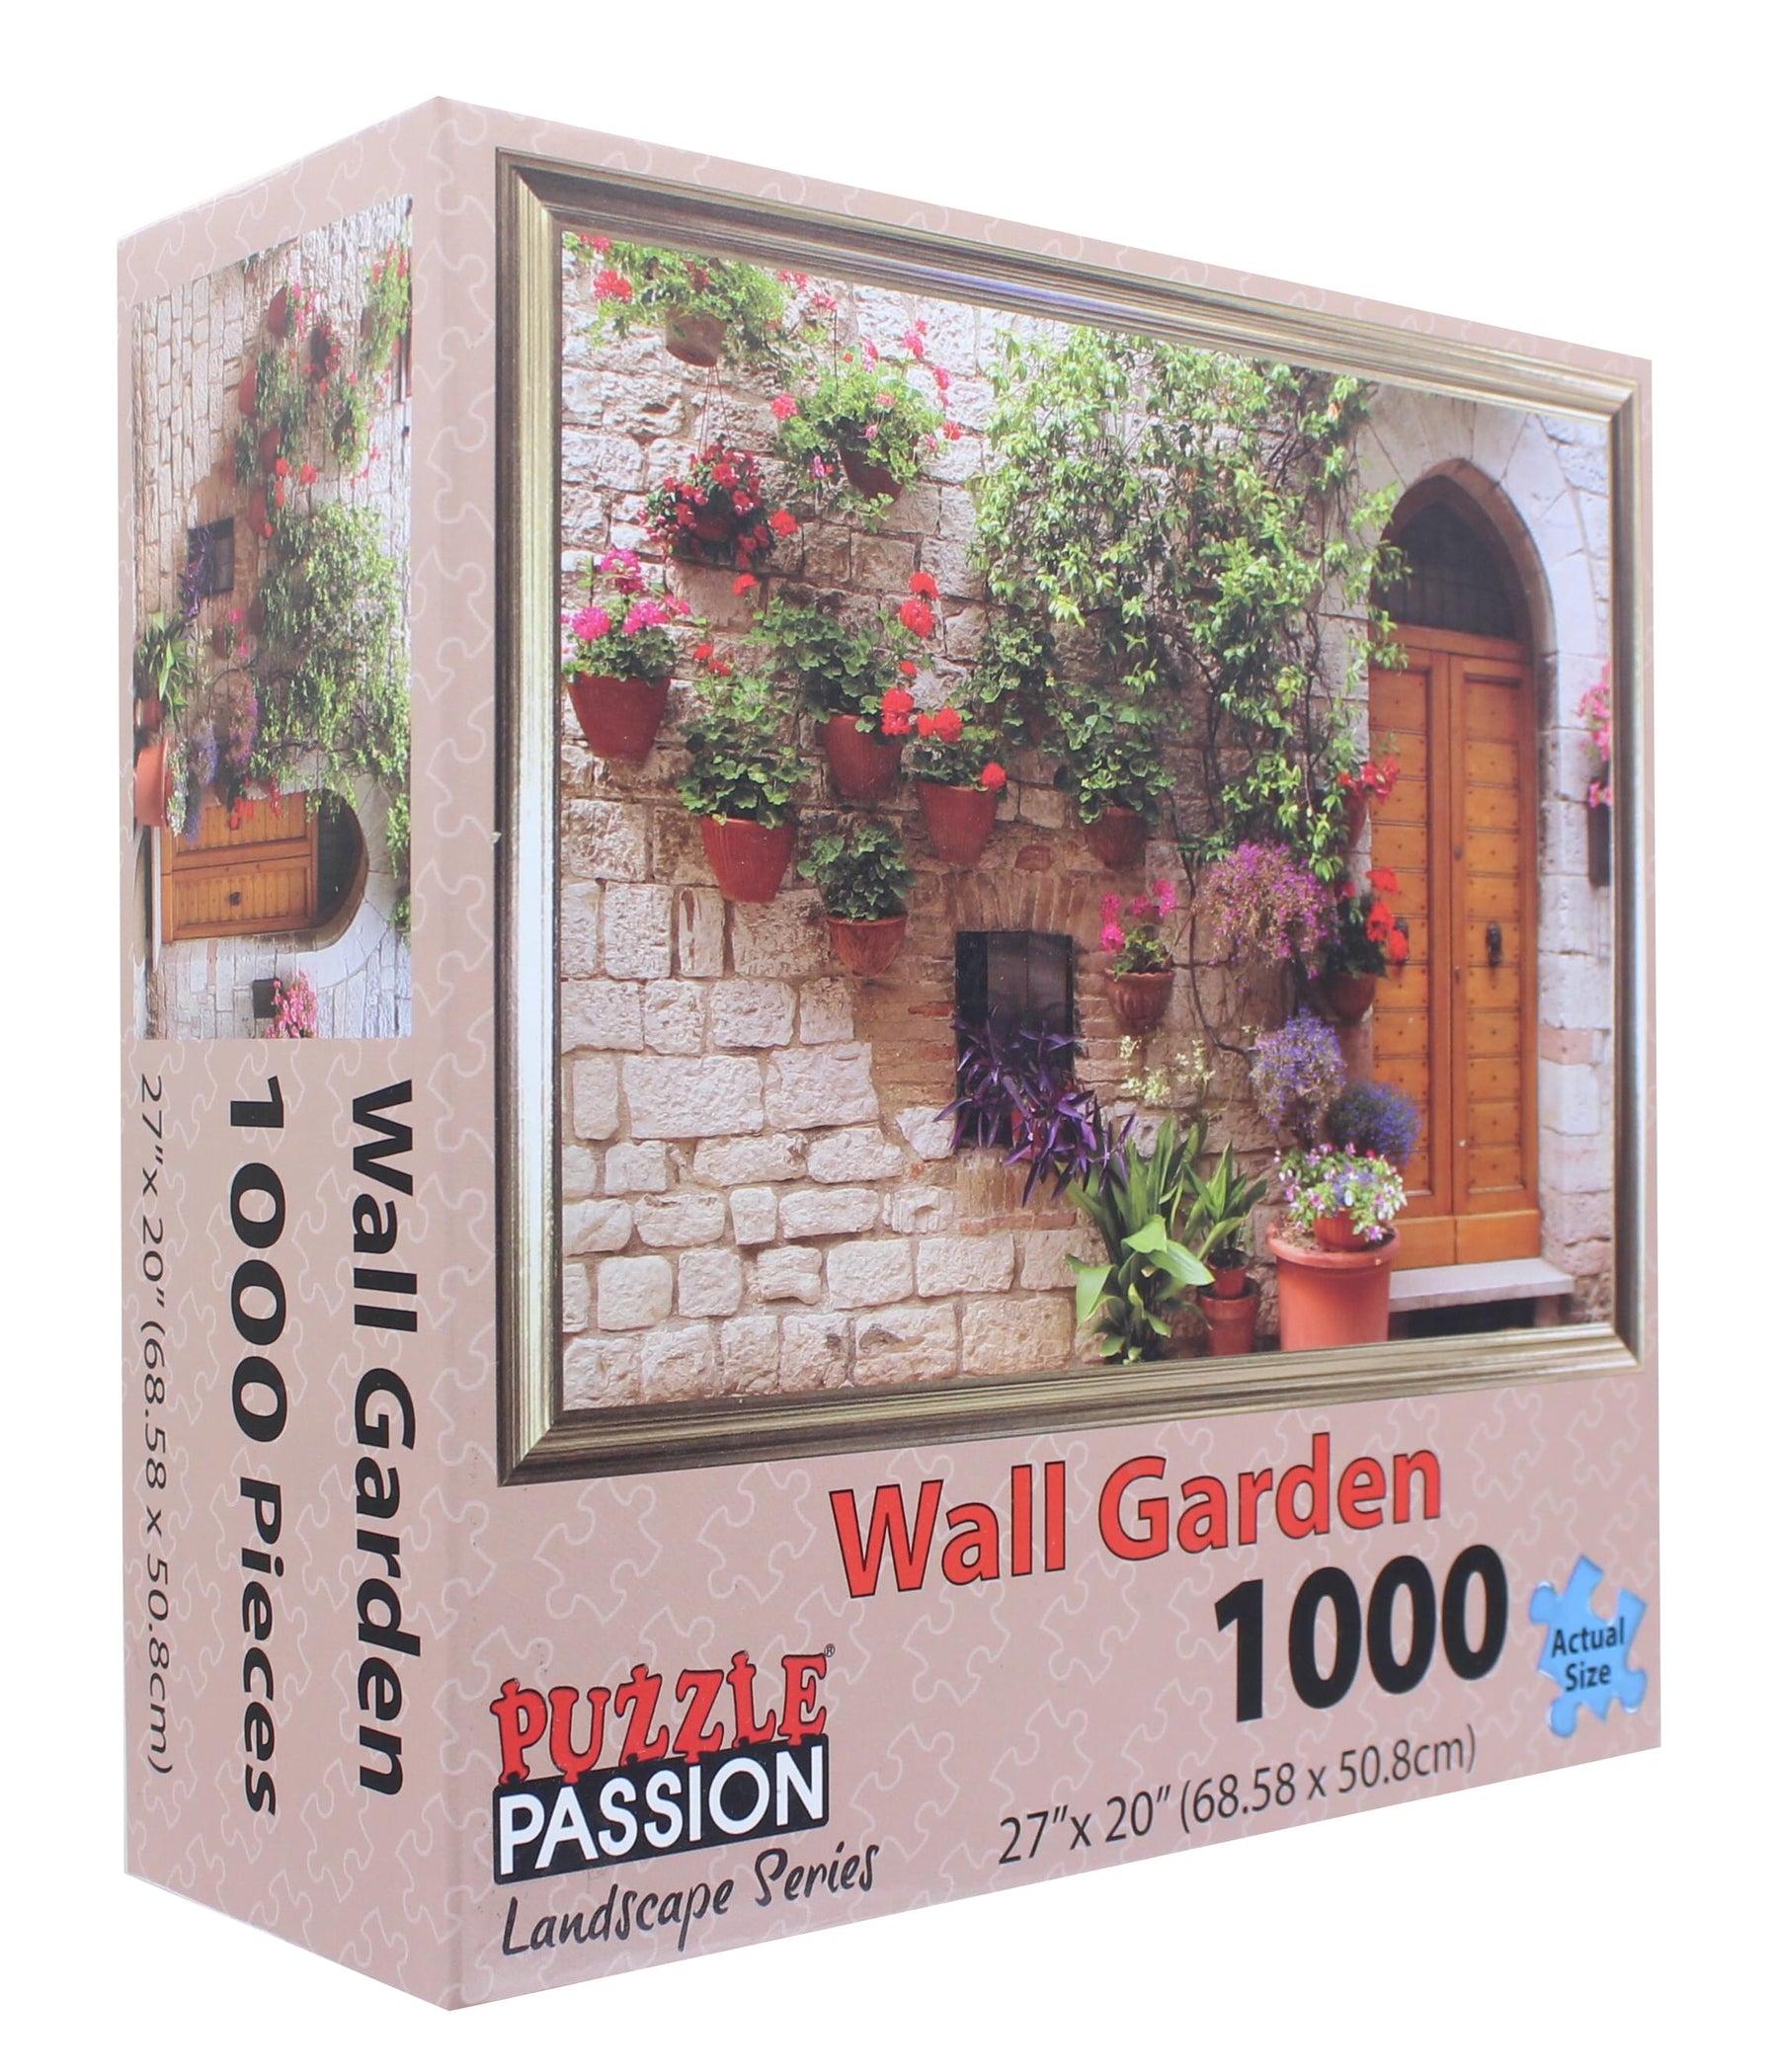 Wall Garden 1000 Piece Landscape Jigsaw Puzzle